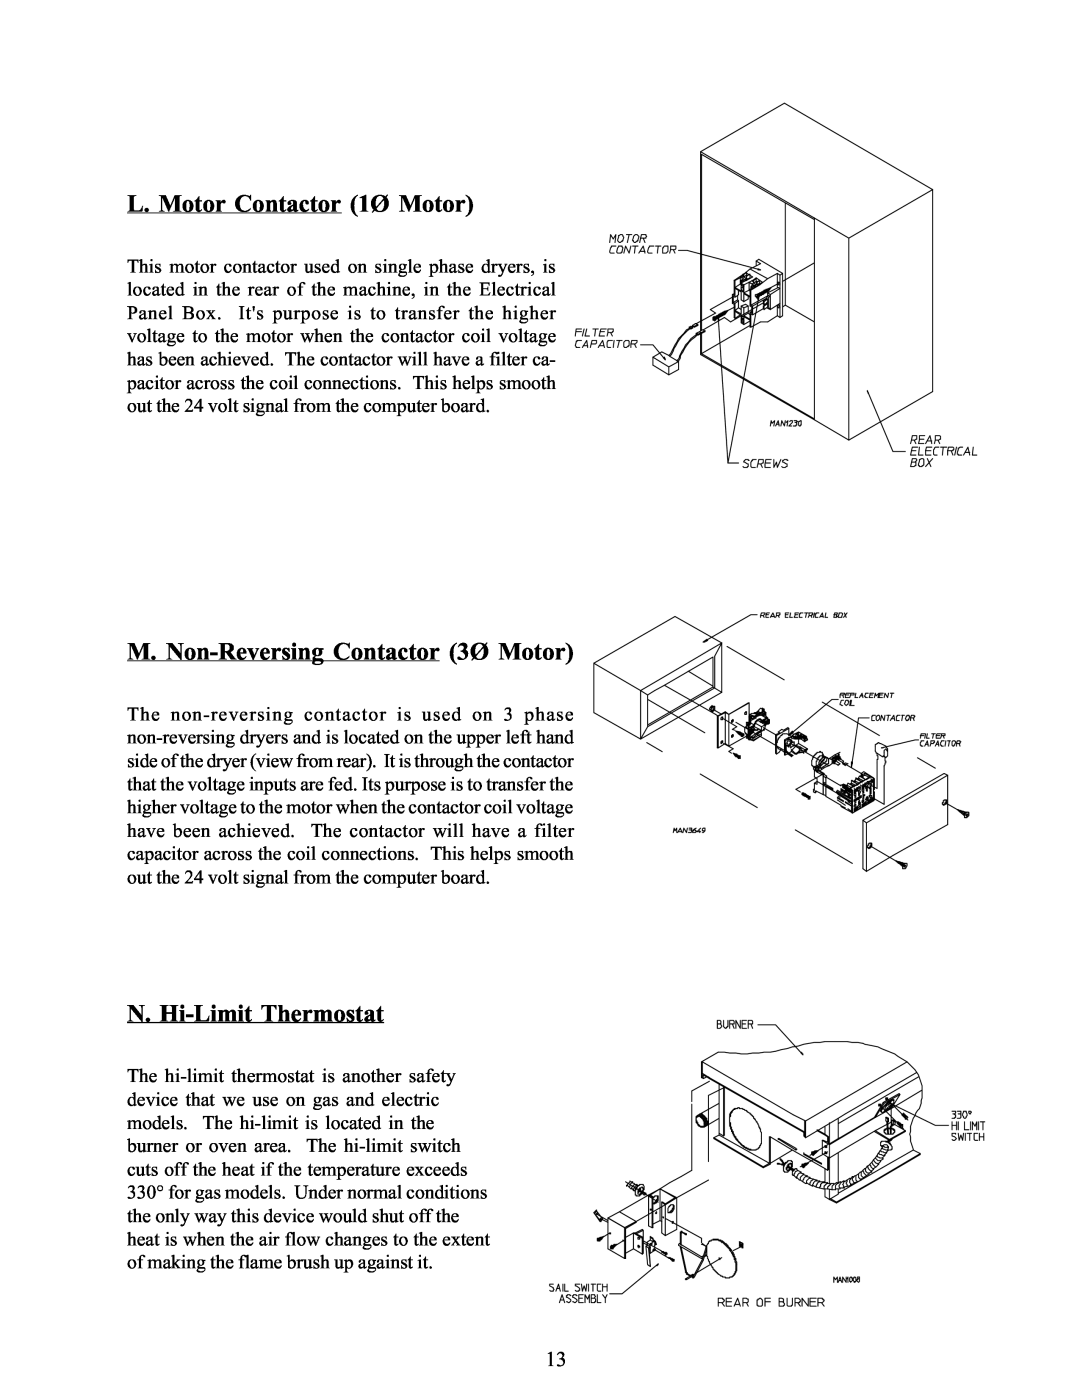 American Dryer Corp WDA-385 L. Motor Contactor 1Ø Motor, M. Non-Reversing Contactor 3Ø Motor, N. Hi-Limit Thermostat 